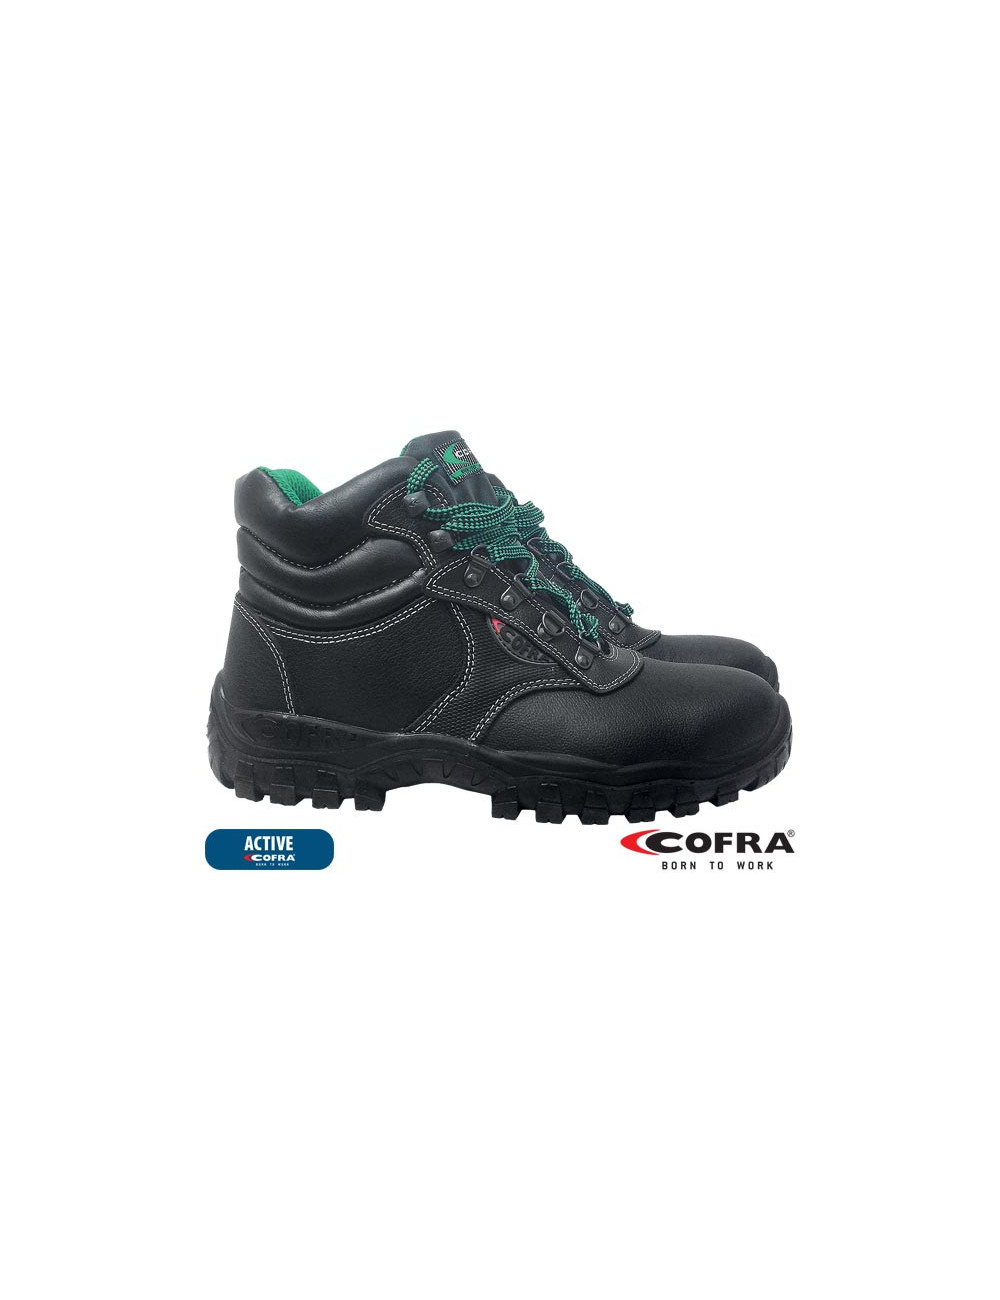 Safety shoes brc-mercurio bz black-green Cofra